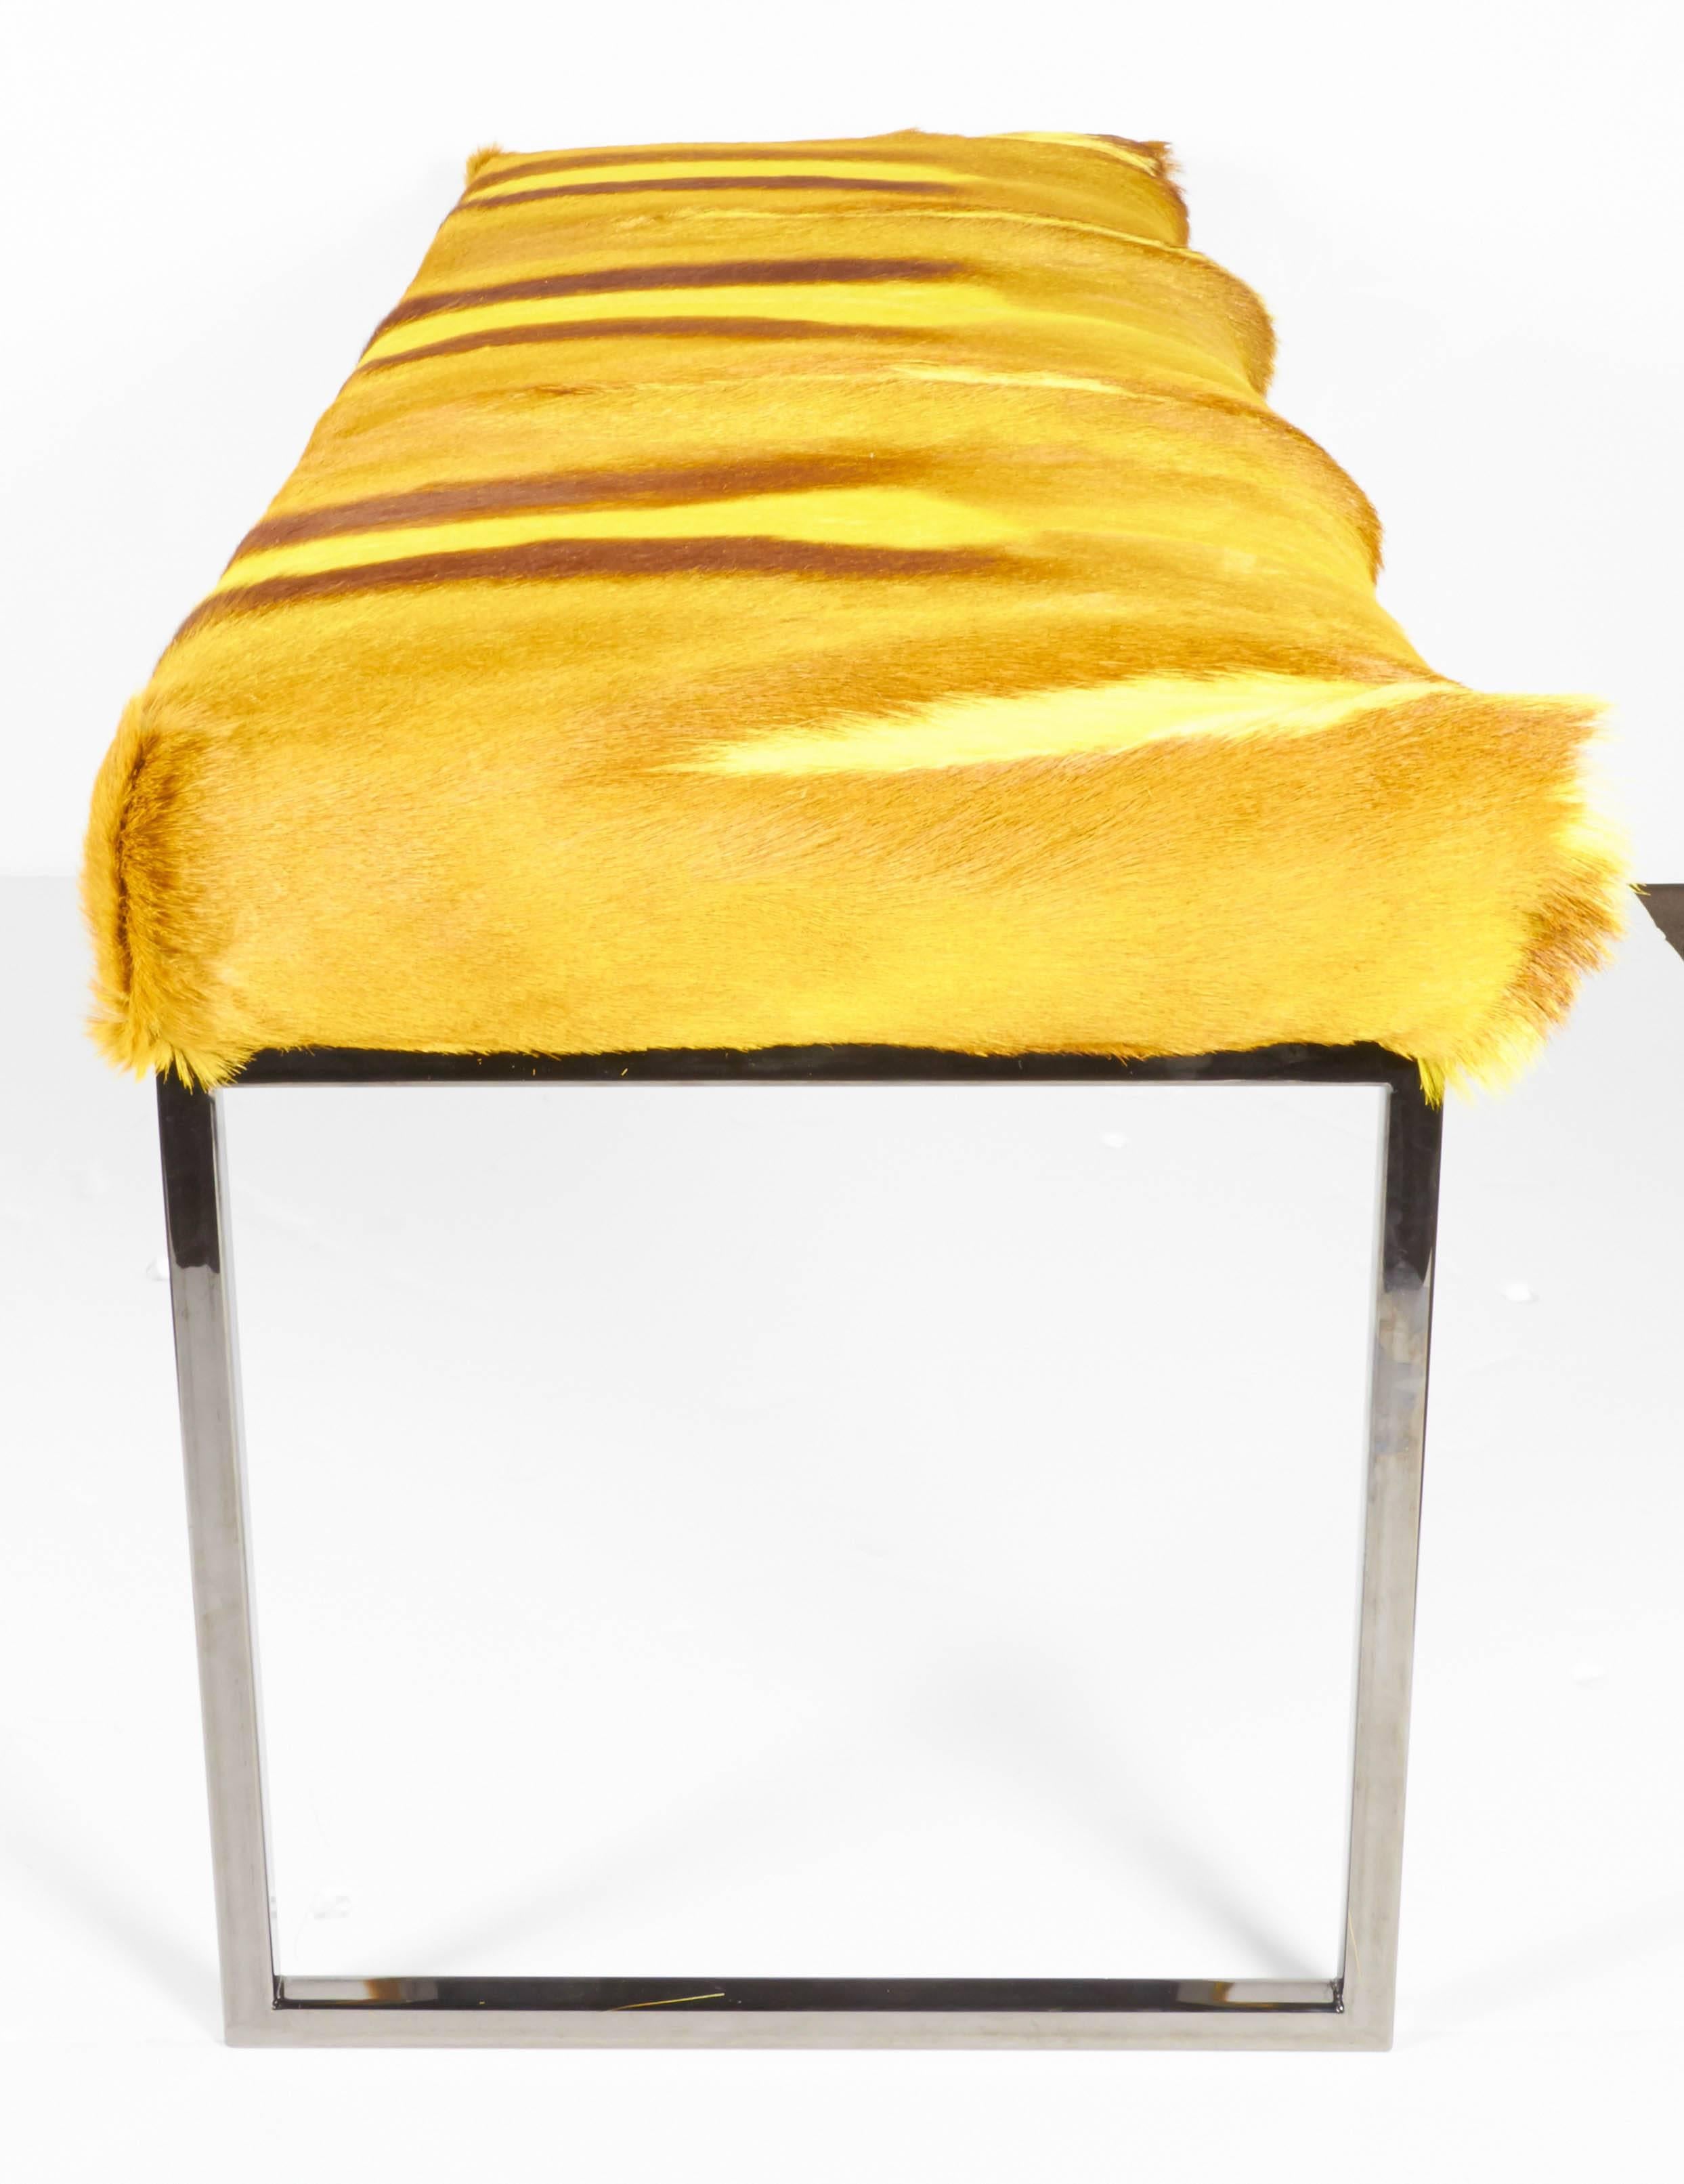 Organic Modern Bespoke Bench in Exotic Springbok Fur in Vibrant Yellow